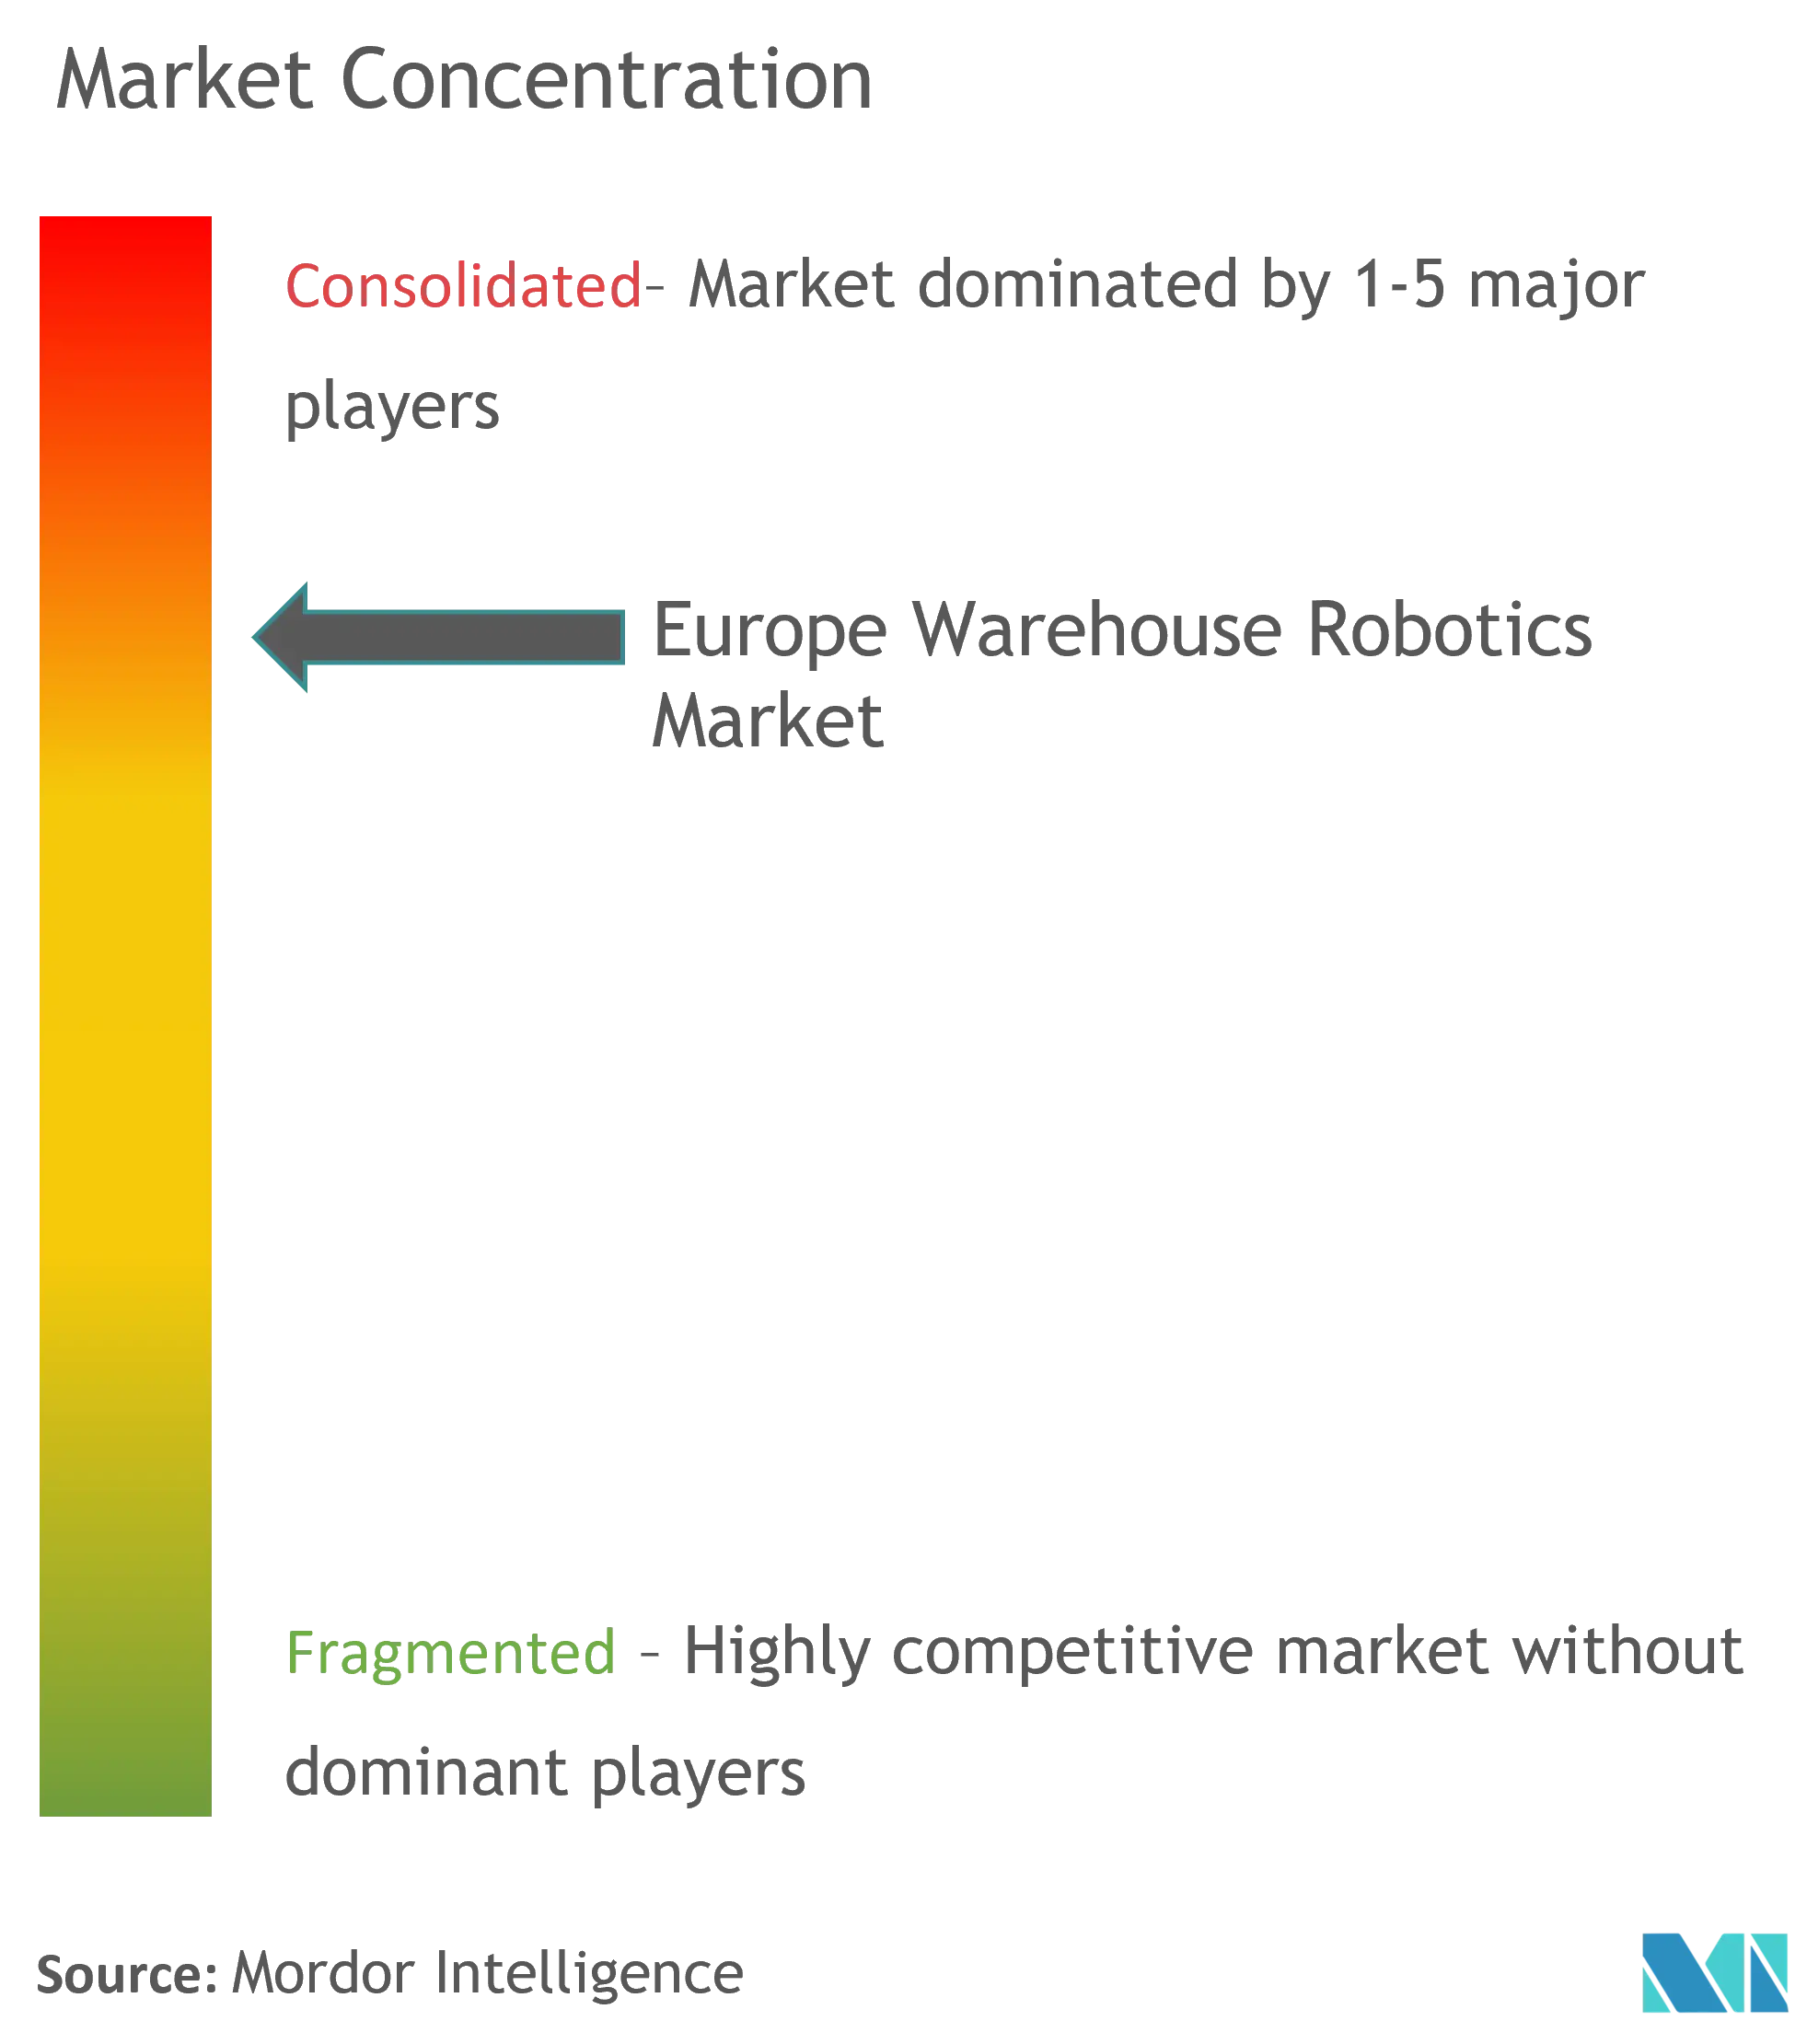 Europe Warehouse Robotics Market Concentration